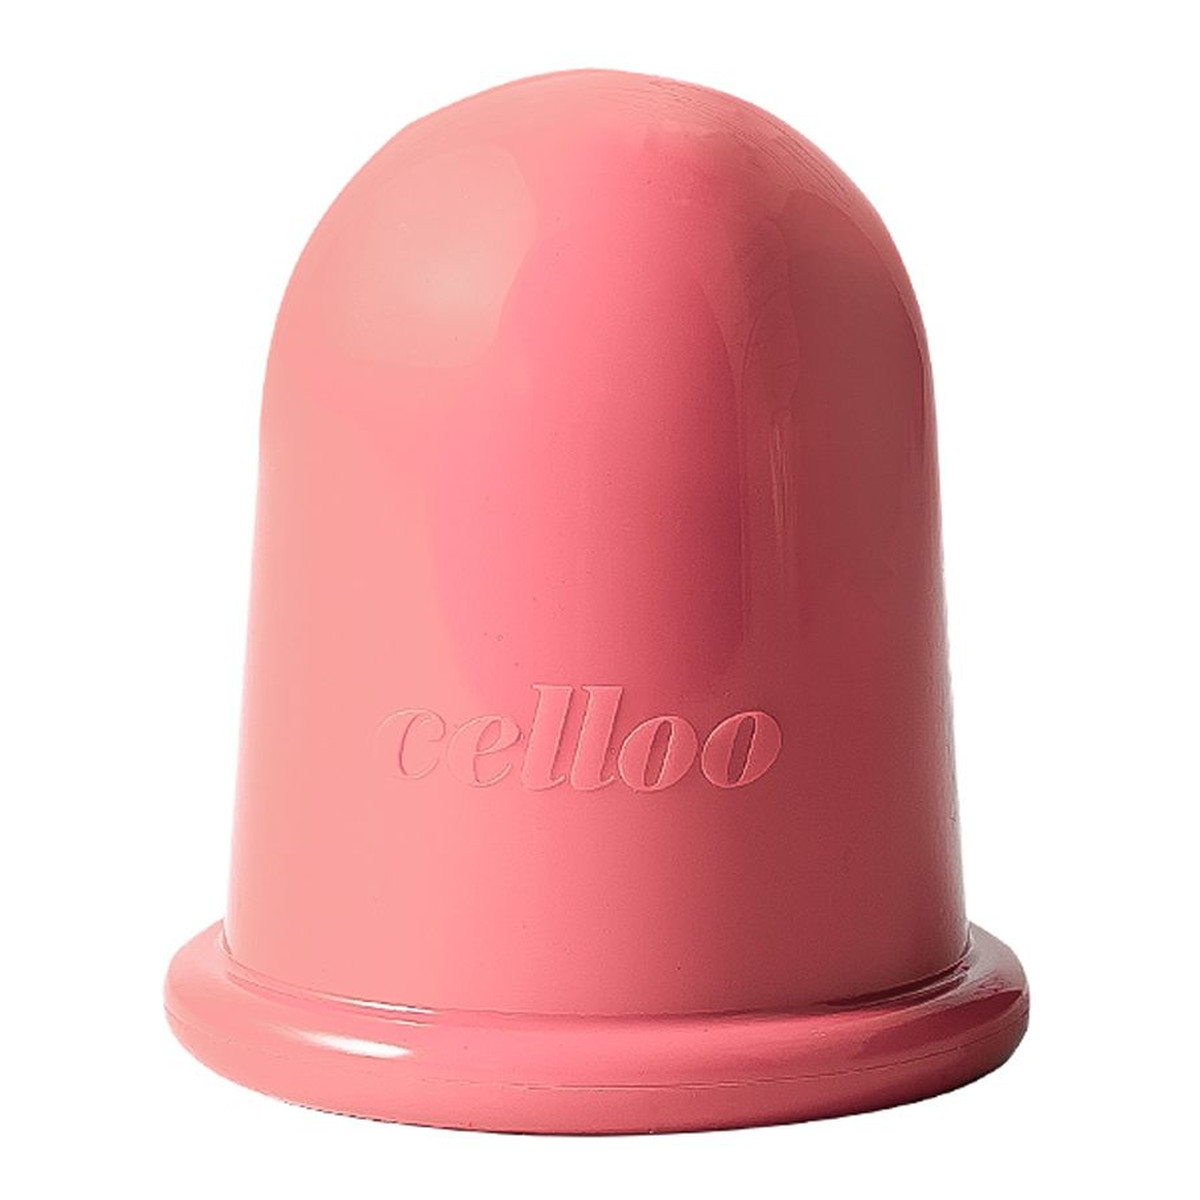 Celloo Cuddle bubble mini silikonowa bańka antycellulitowa 5cm